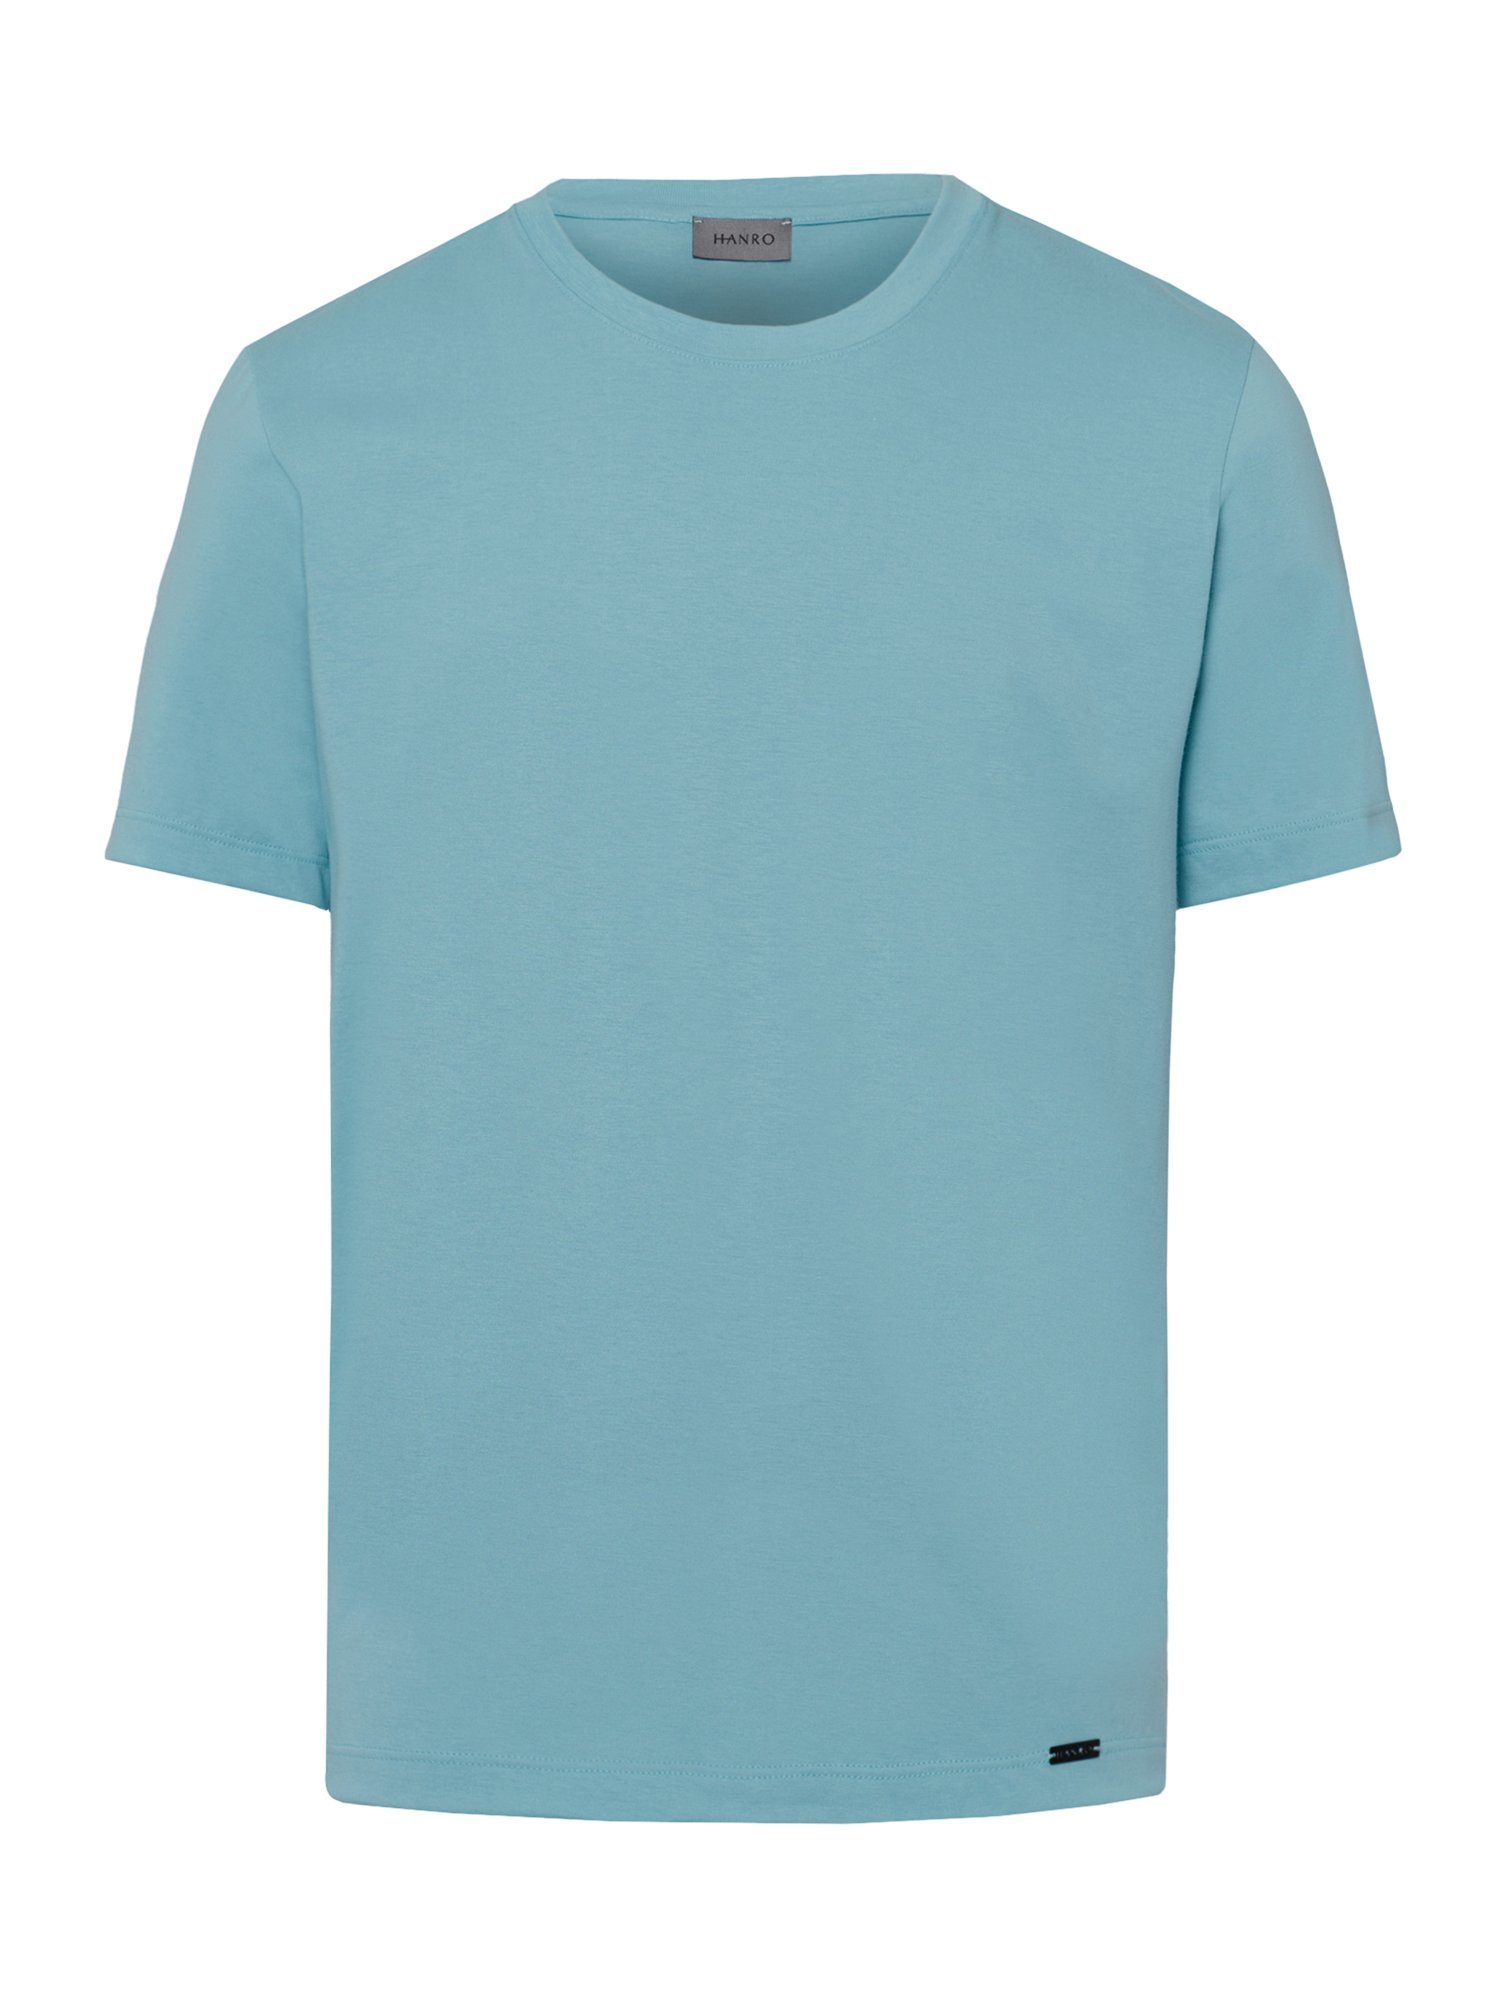 Hanro T-Shirt Living Shirts arctic blue